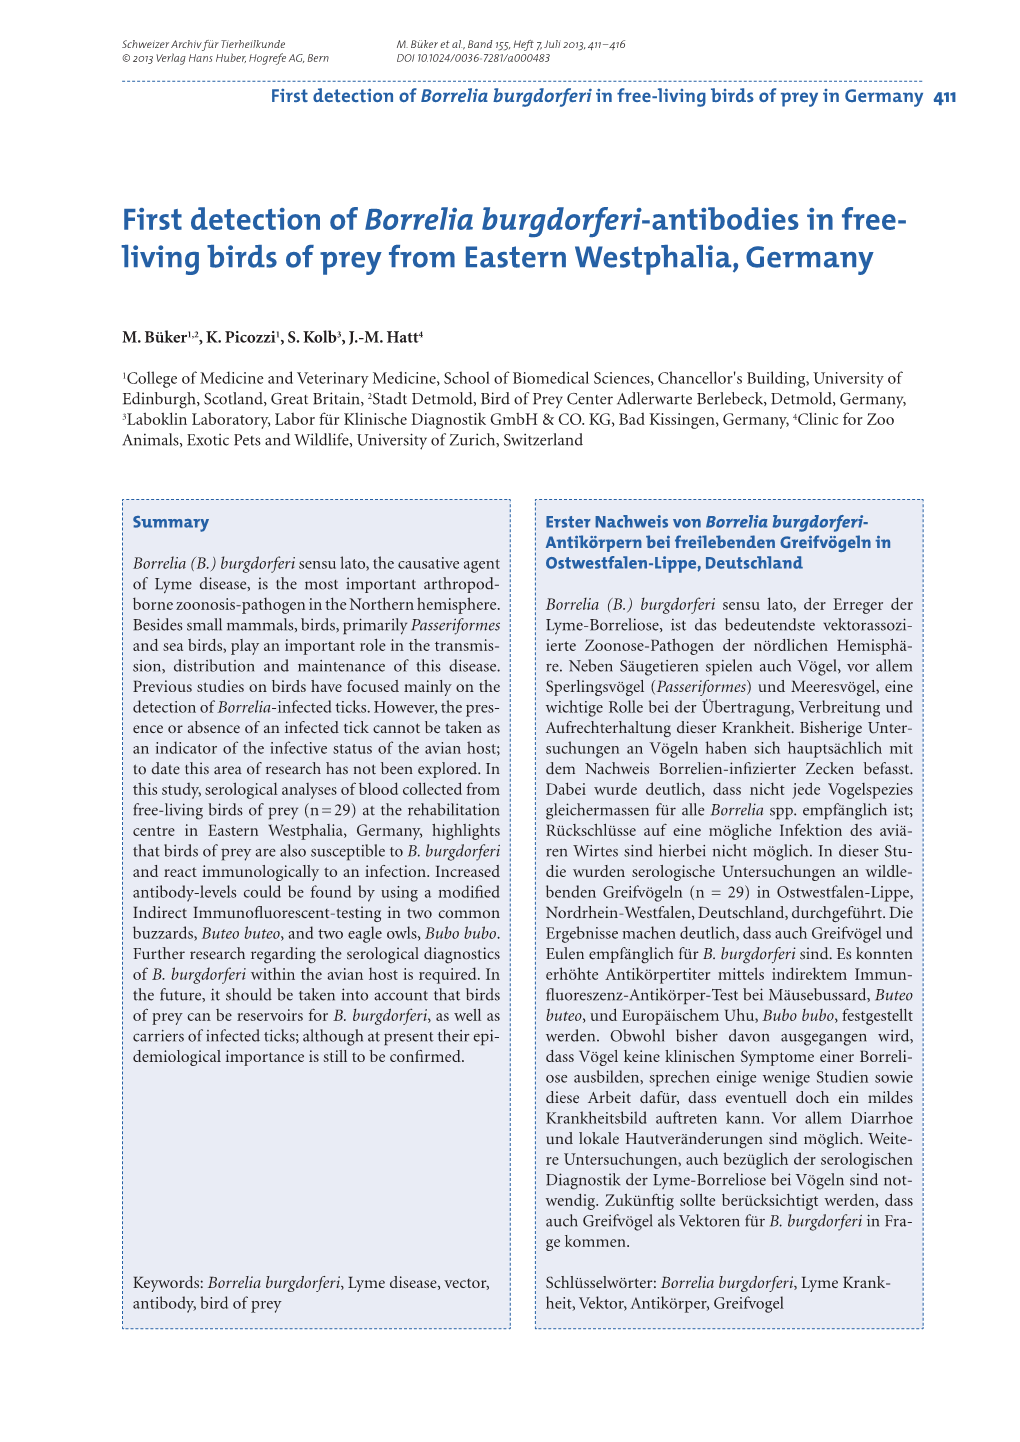 First Detection of Borrelia Burgdorferi-Antibodies in Free- Living Birds of Prey from Eastern Westphalia, Germany